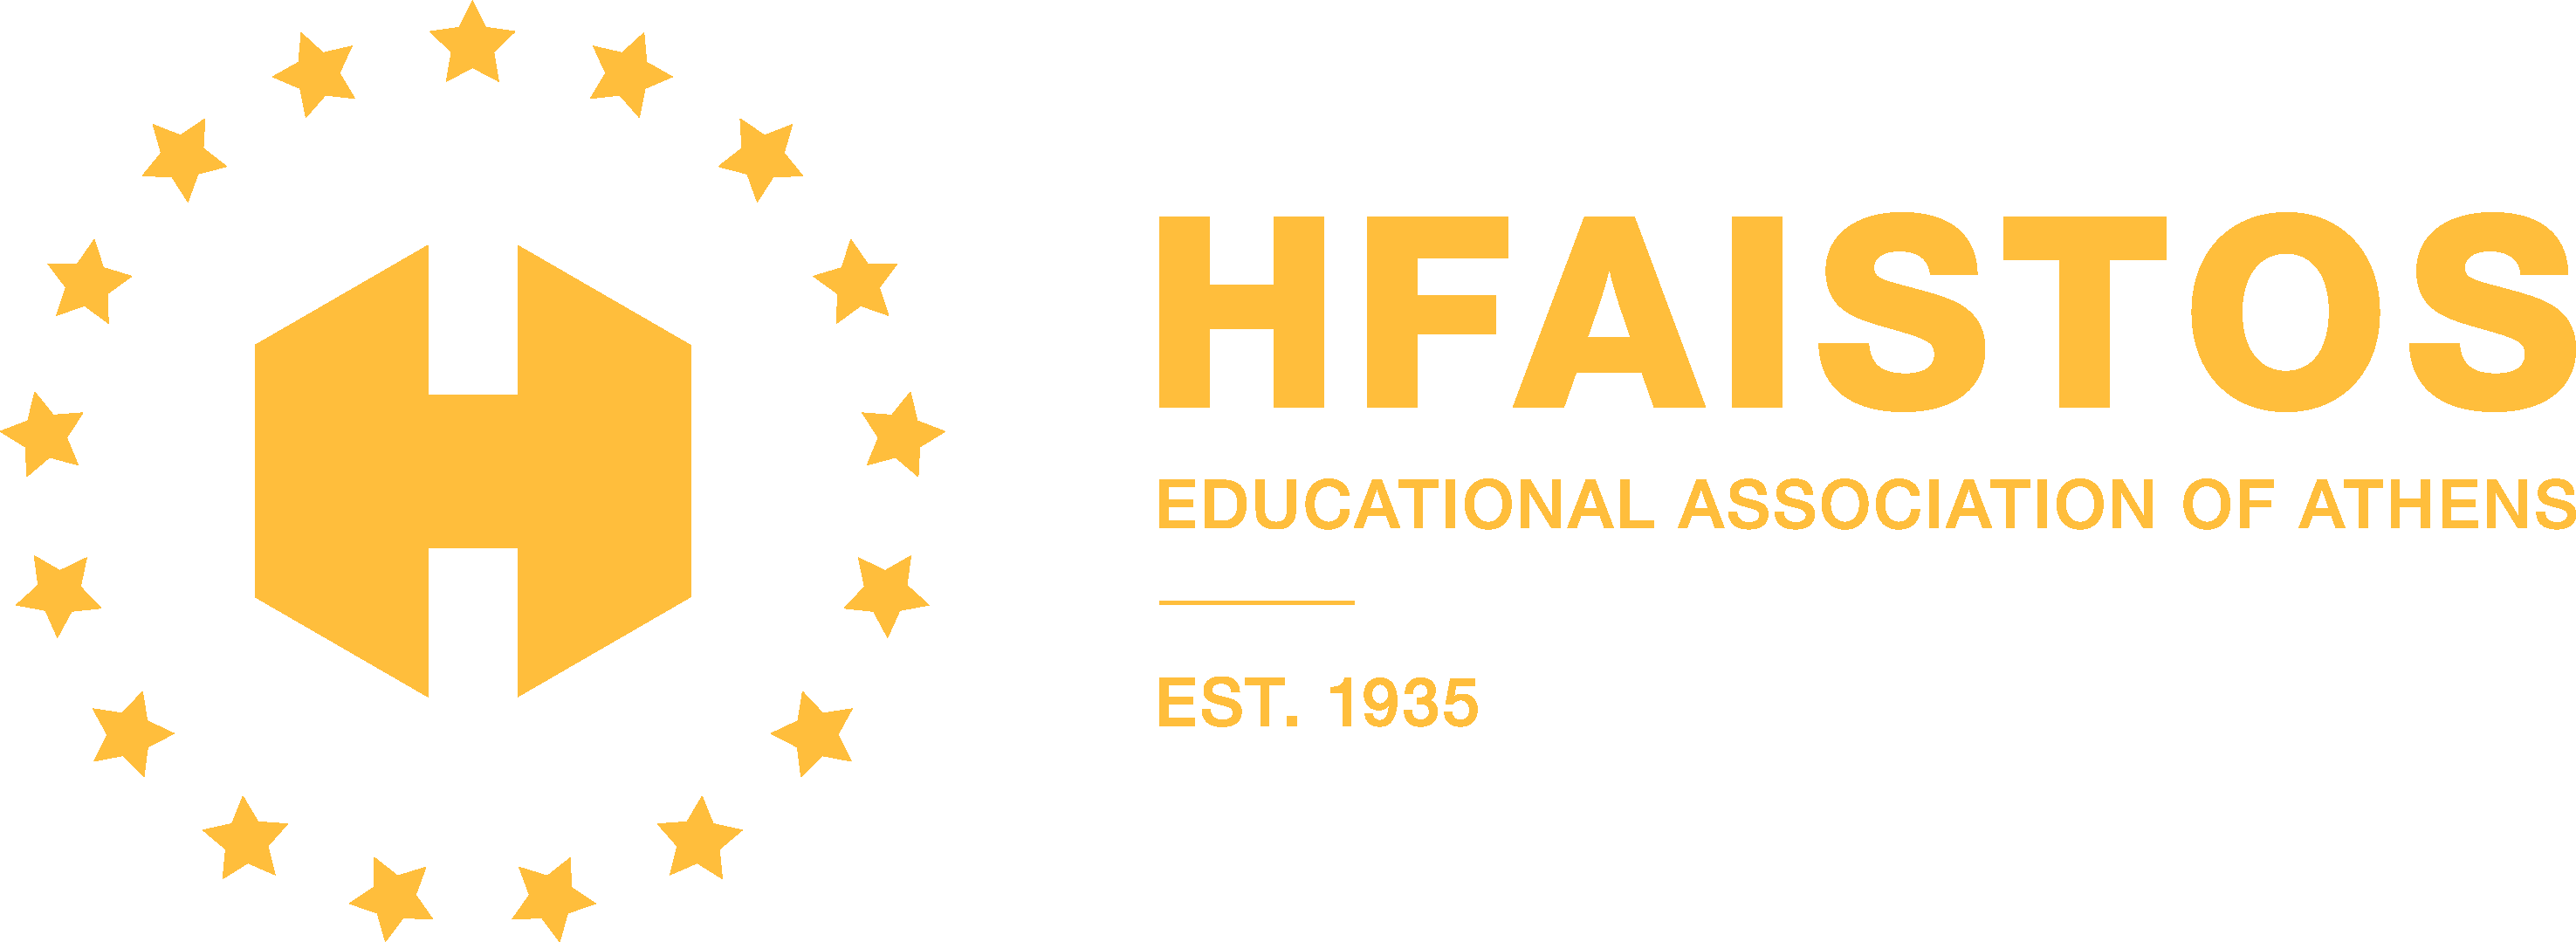 Hfaistos Educational Association of Athens